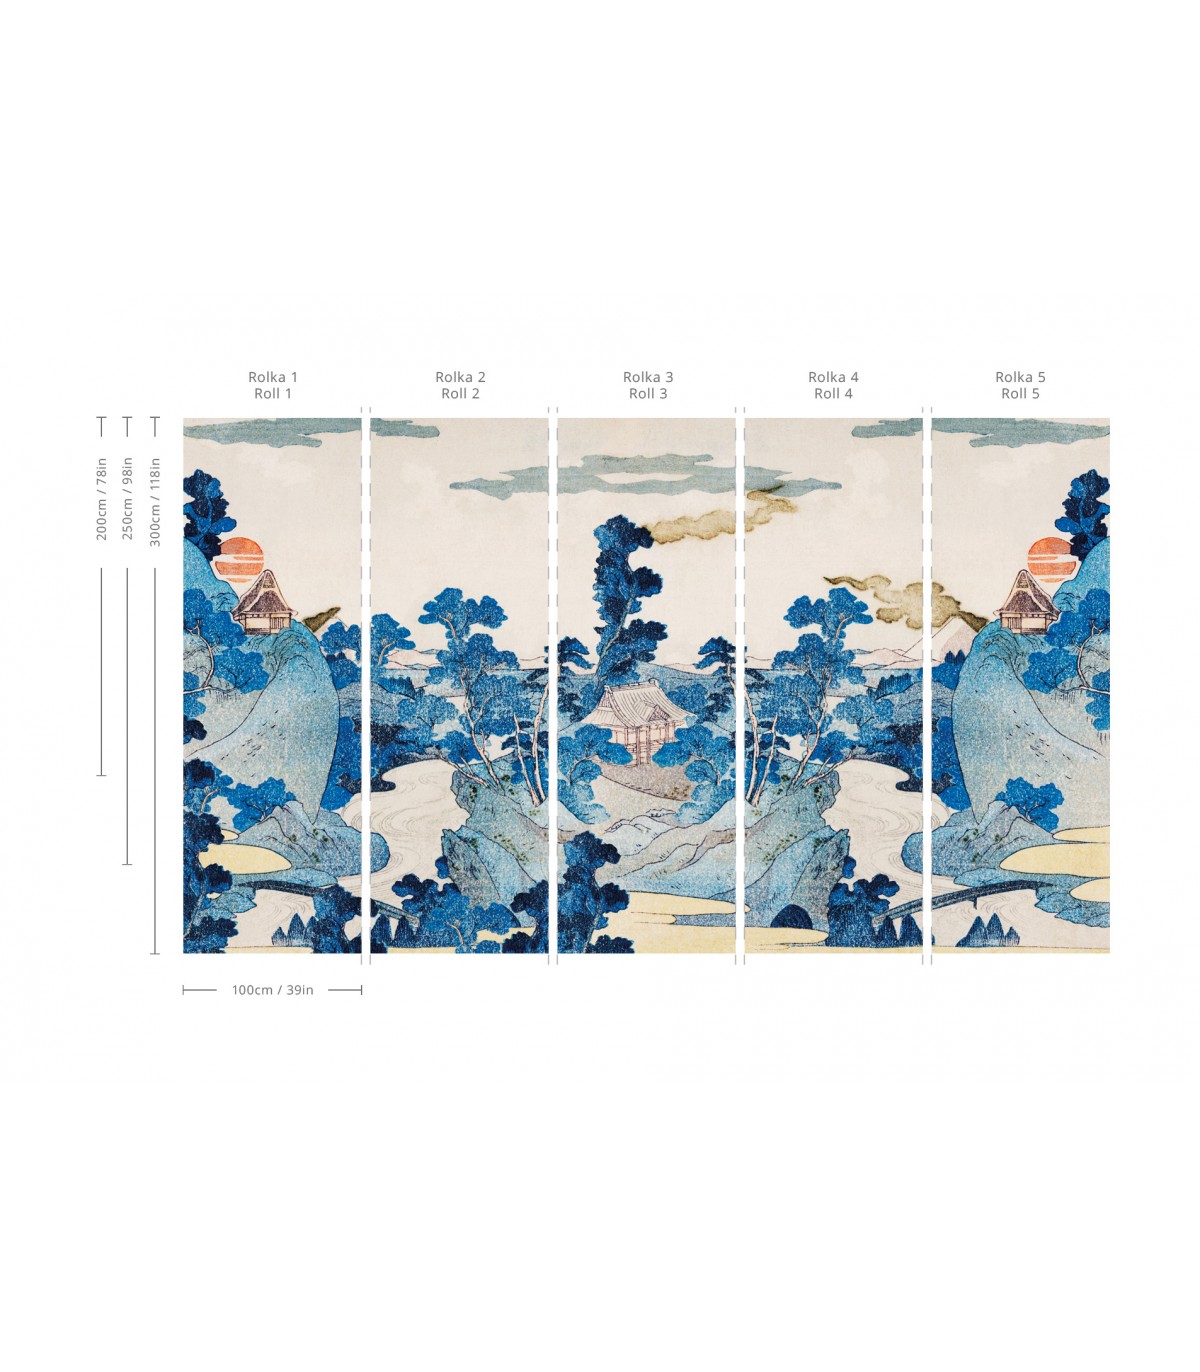 Japanese Tapete - Wallcolors  - Exklusive Hintergrundbilder